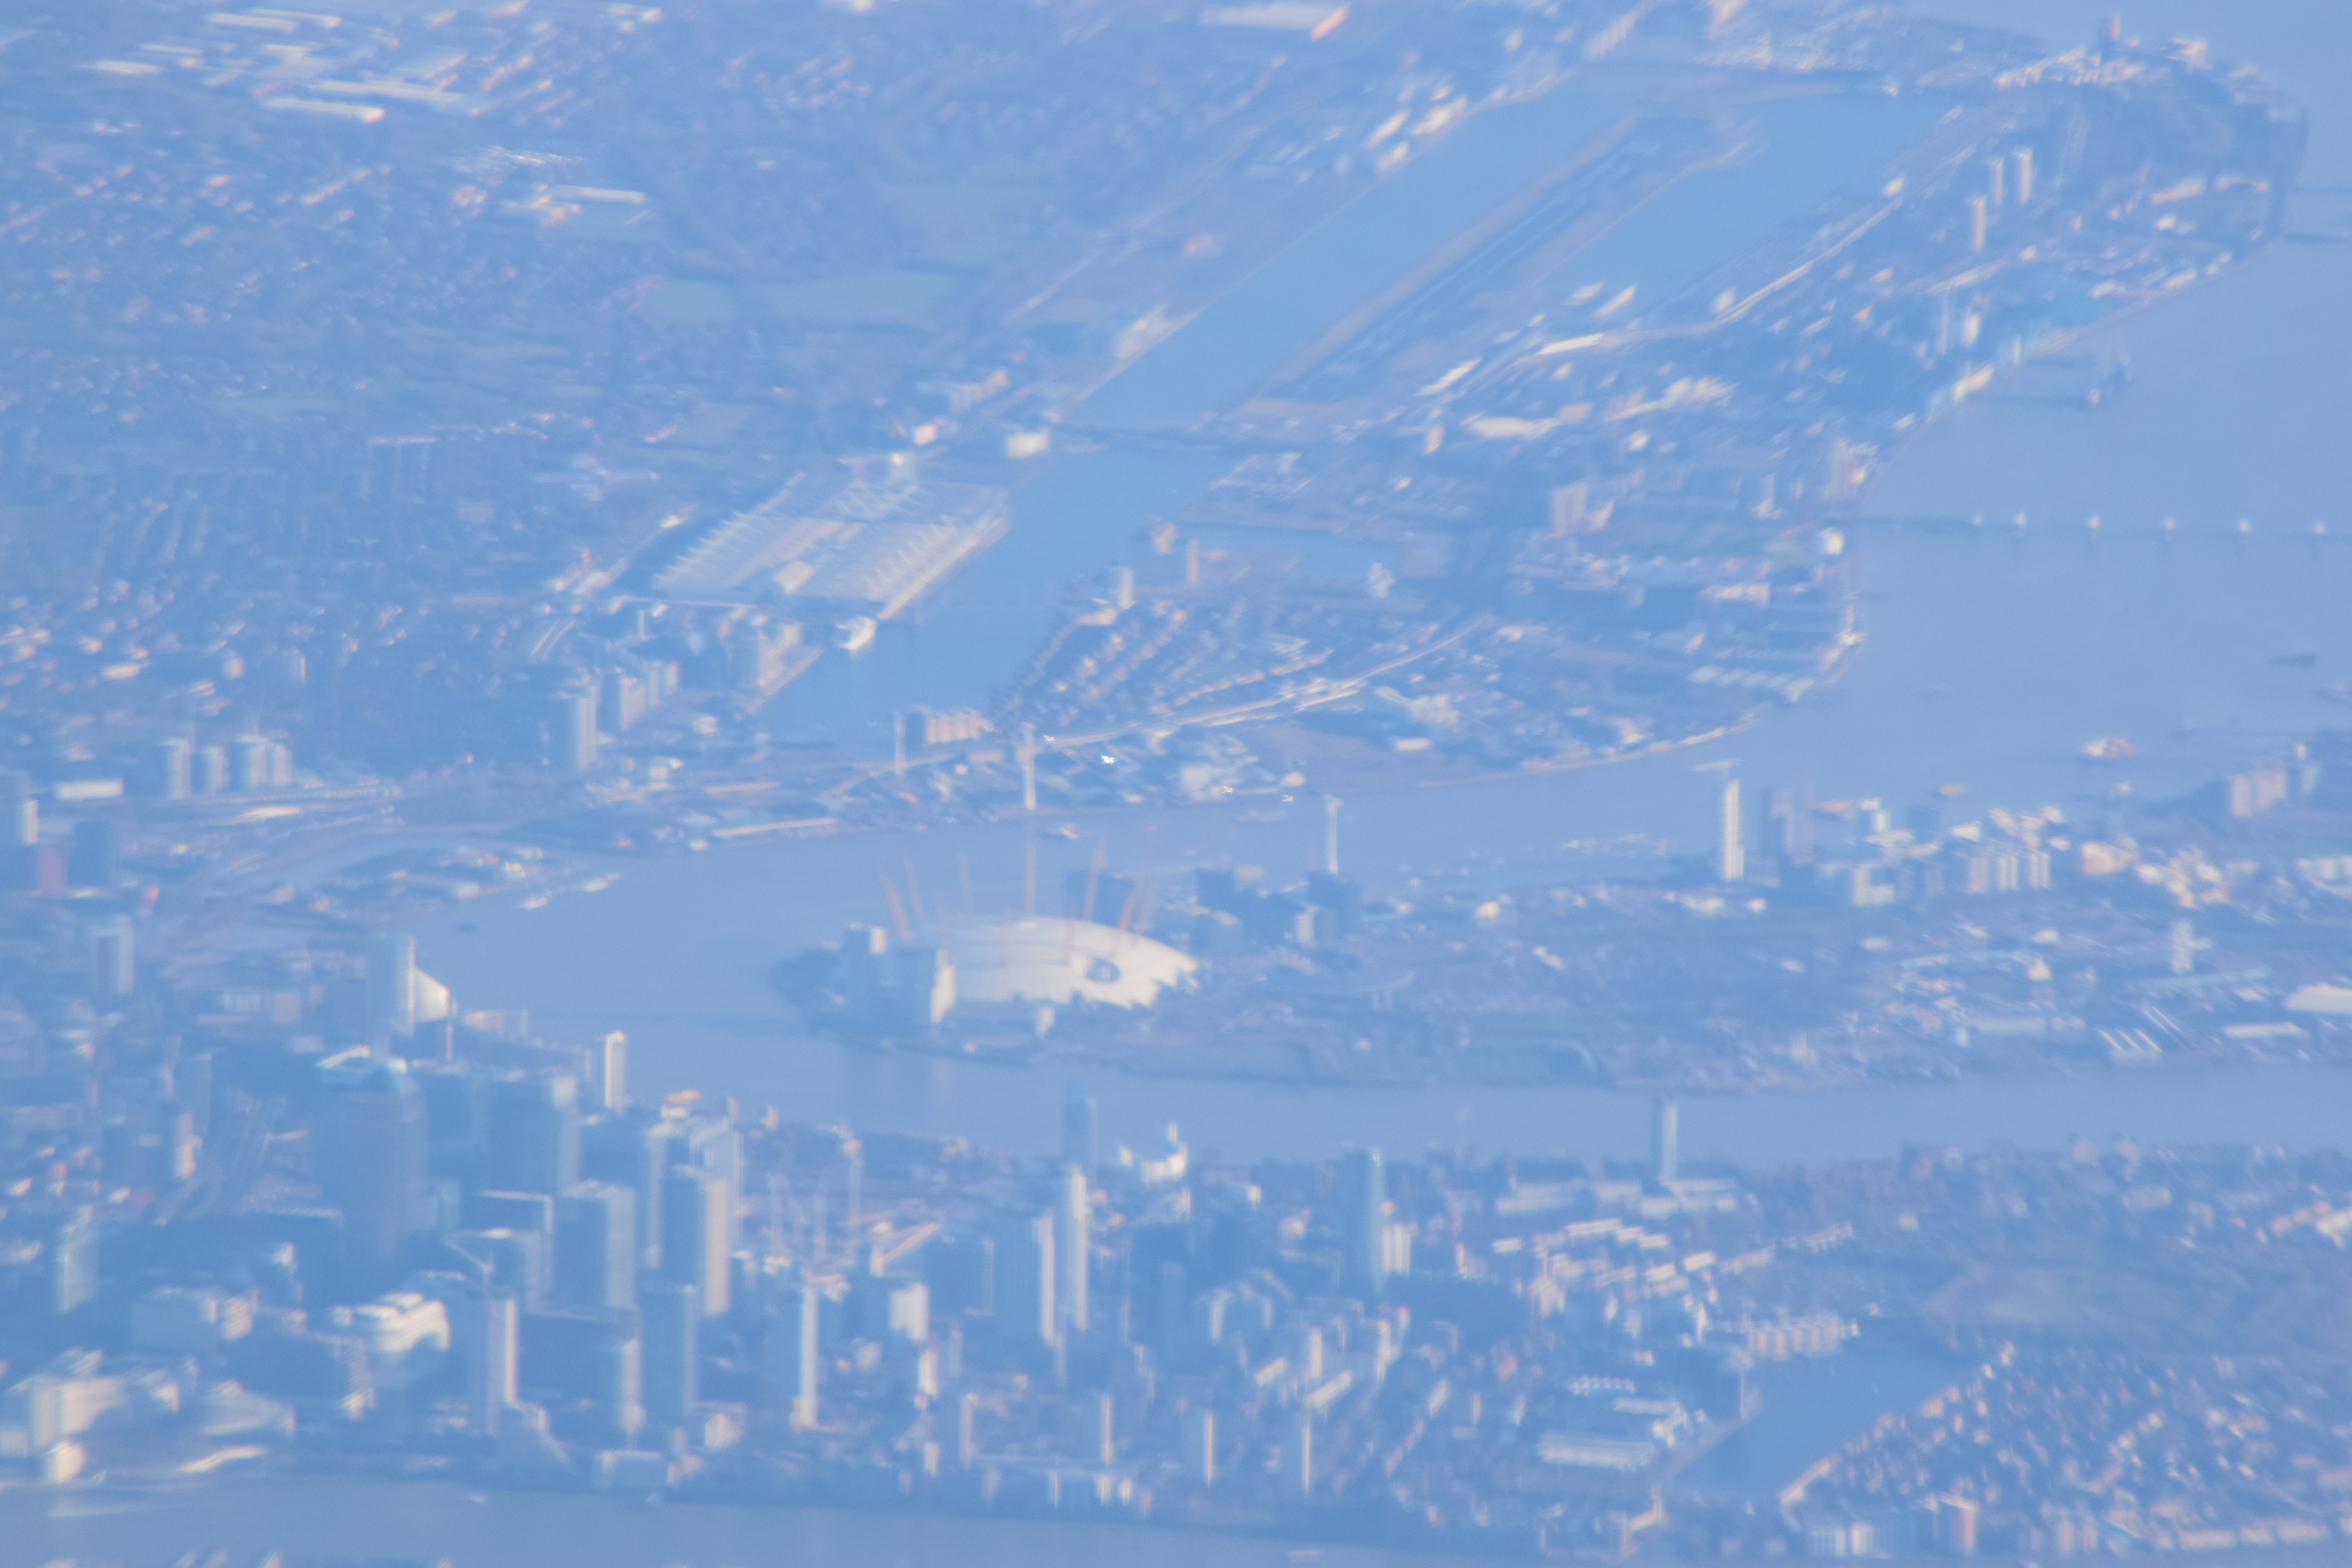 Greater London seen from the plane Ryanair TLS - STN flight